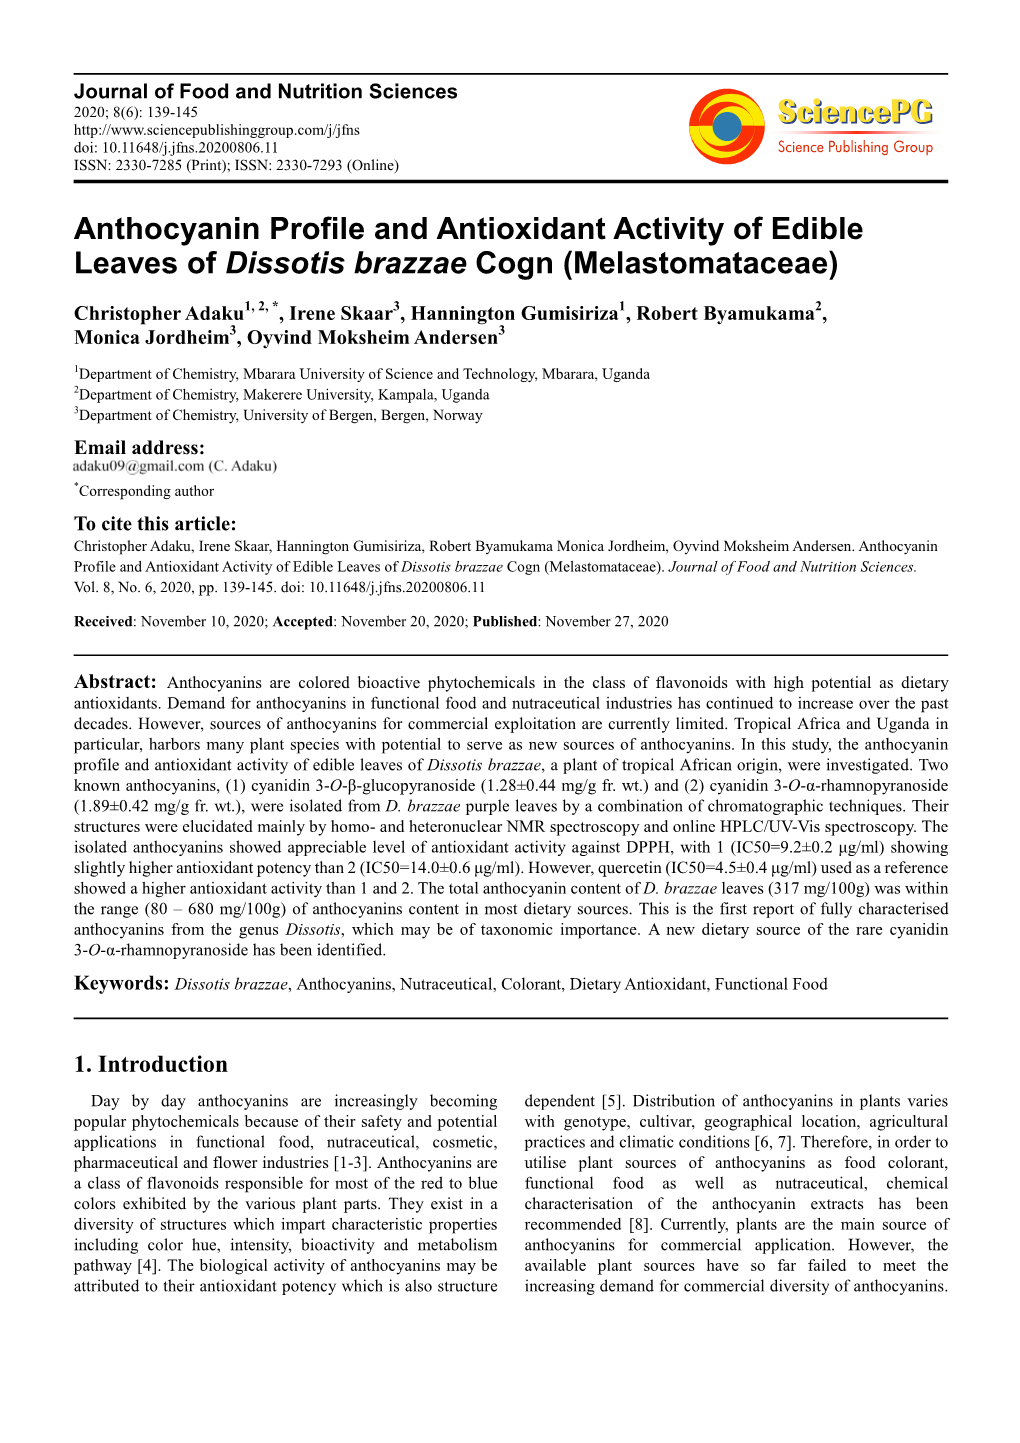 Anthocyanin Profile and Antioxidant Activity of Edible Leaves of Dissotis Brazzae Cogn (Melastomataceae)